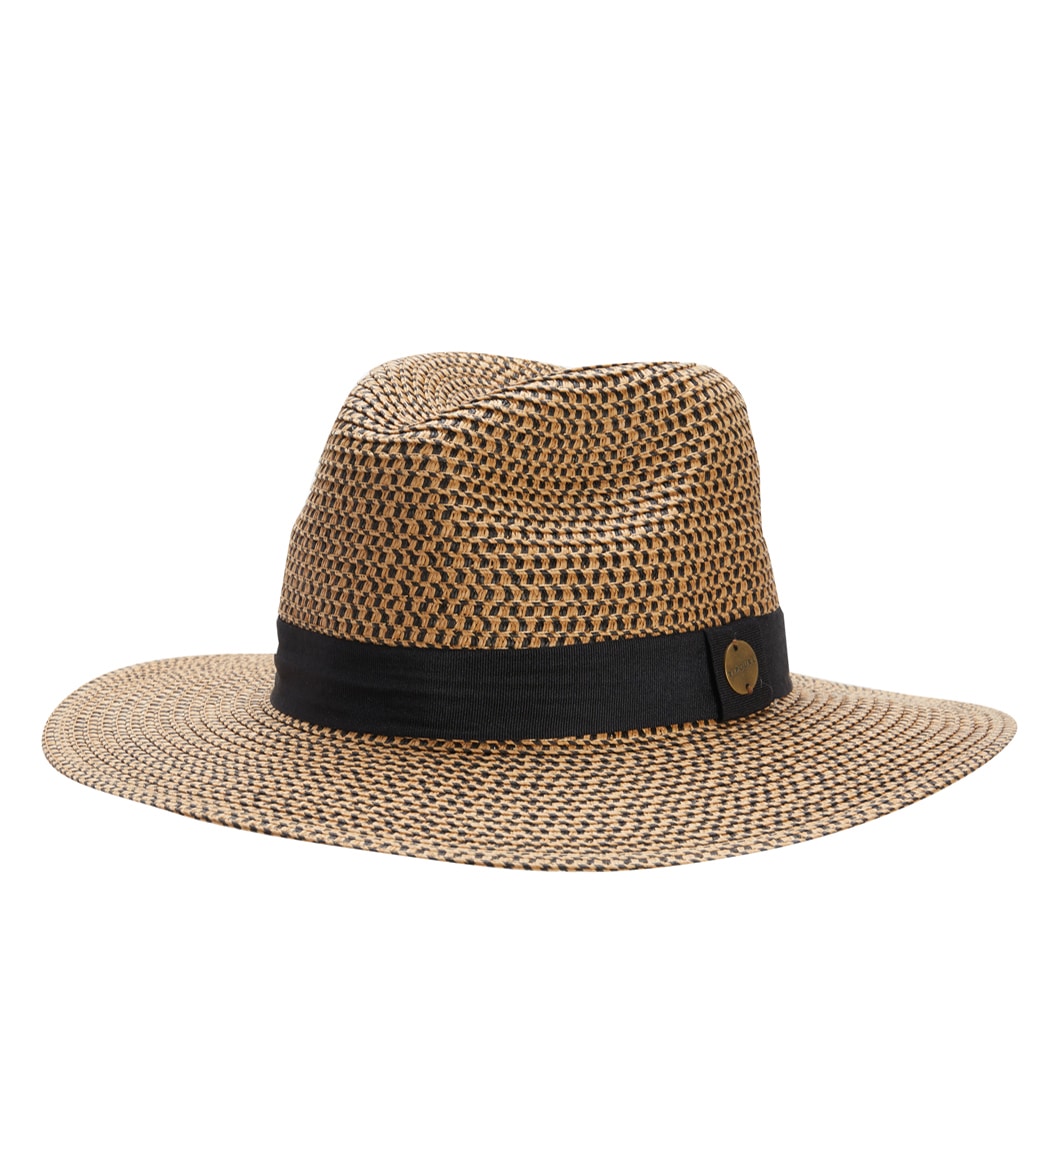 Rip Curl Women's Dakota Panama Hat - Black/Tan Medium - Swimoutlet.com